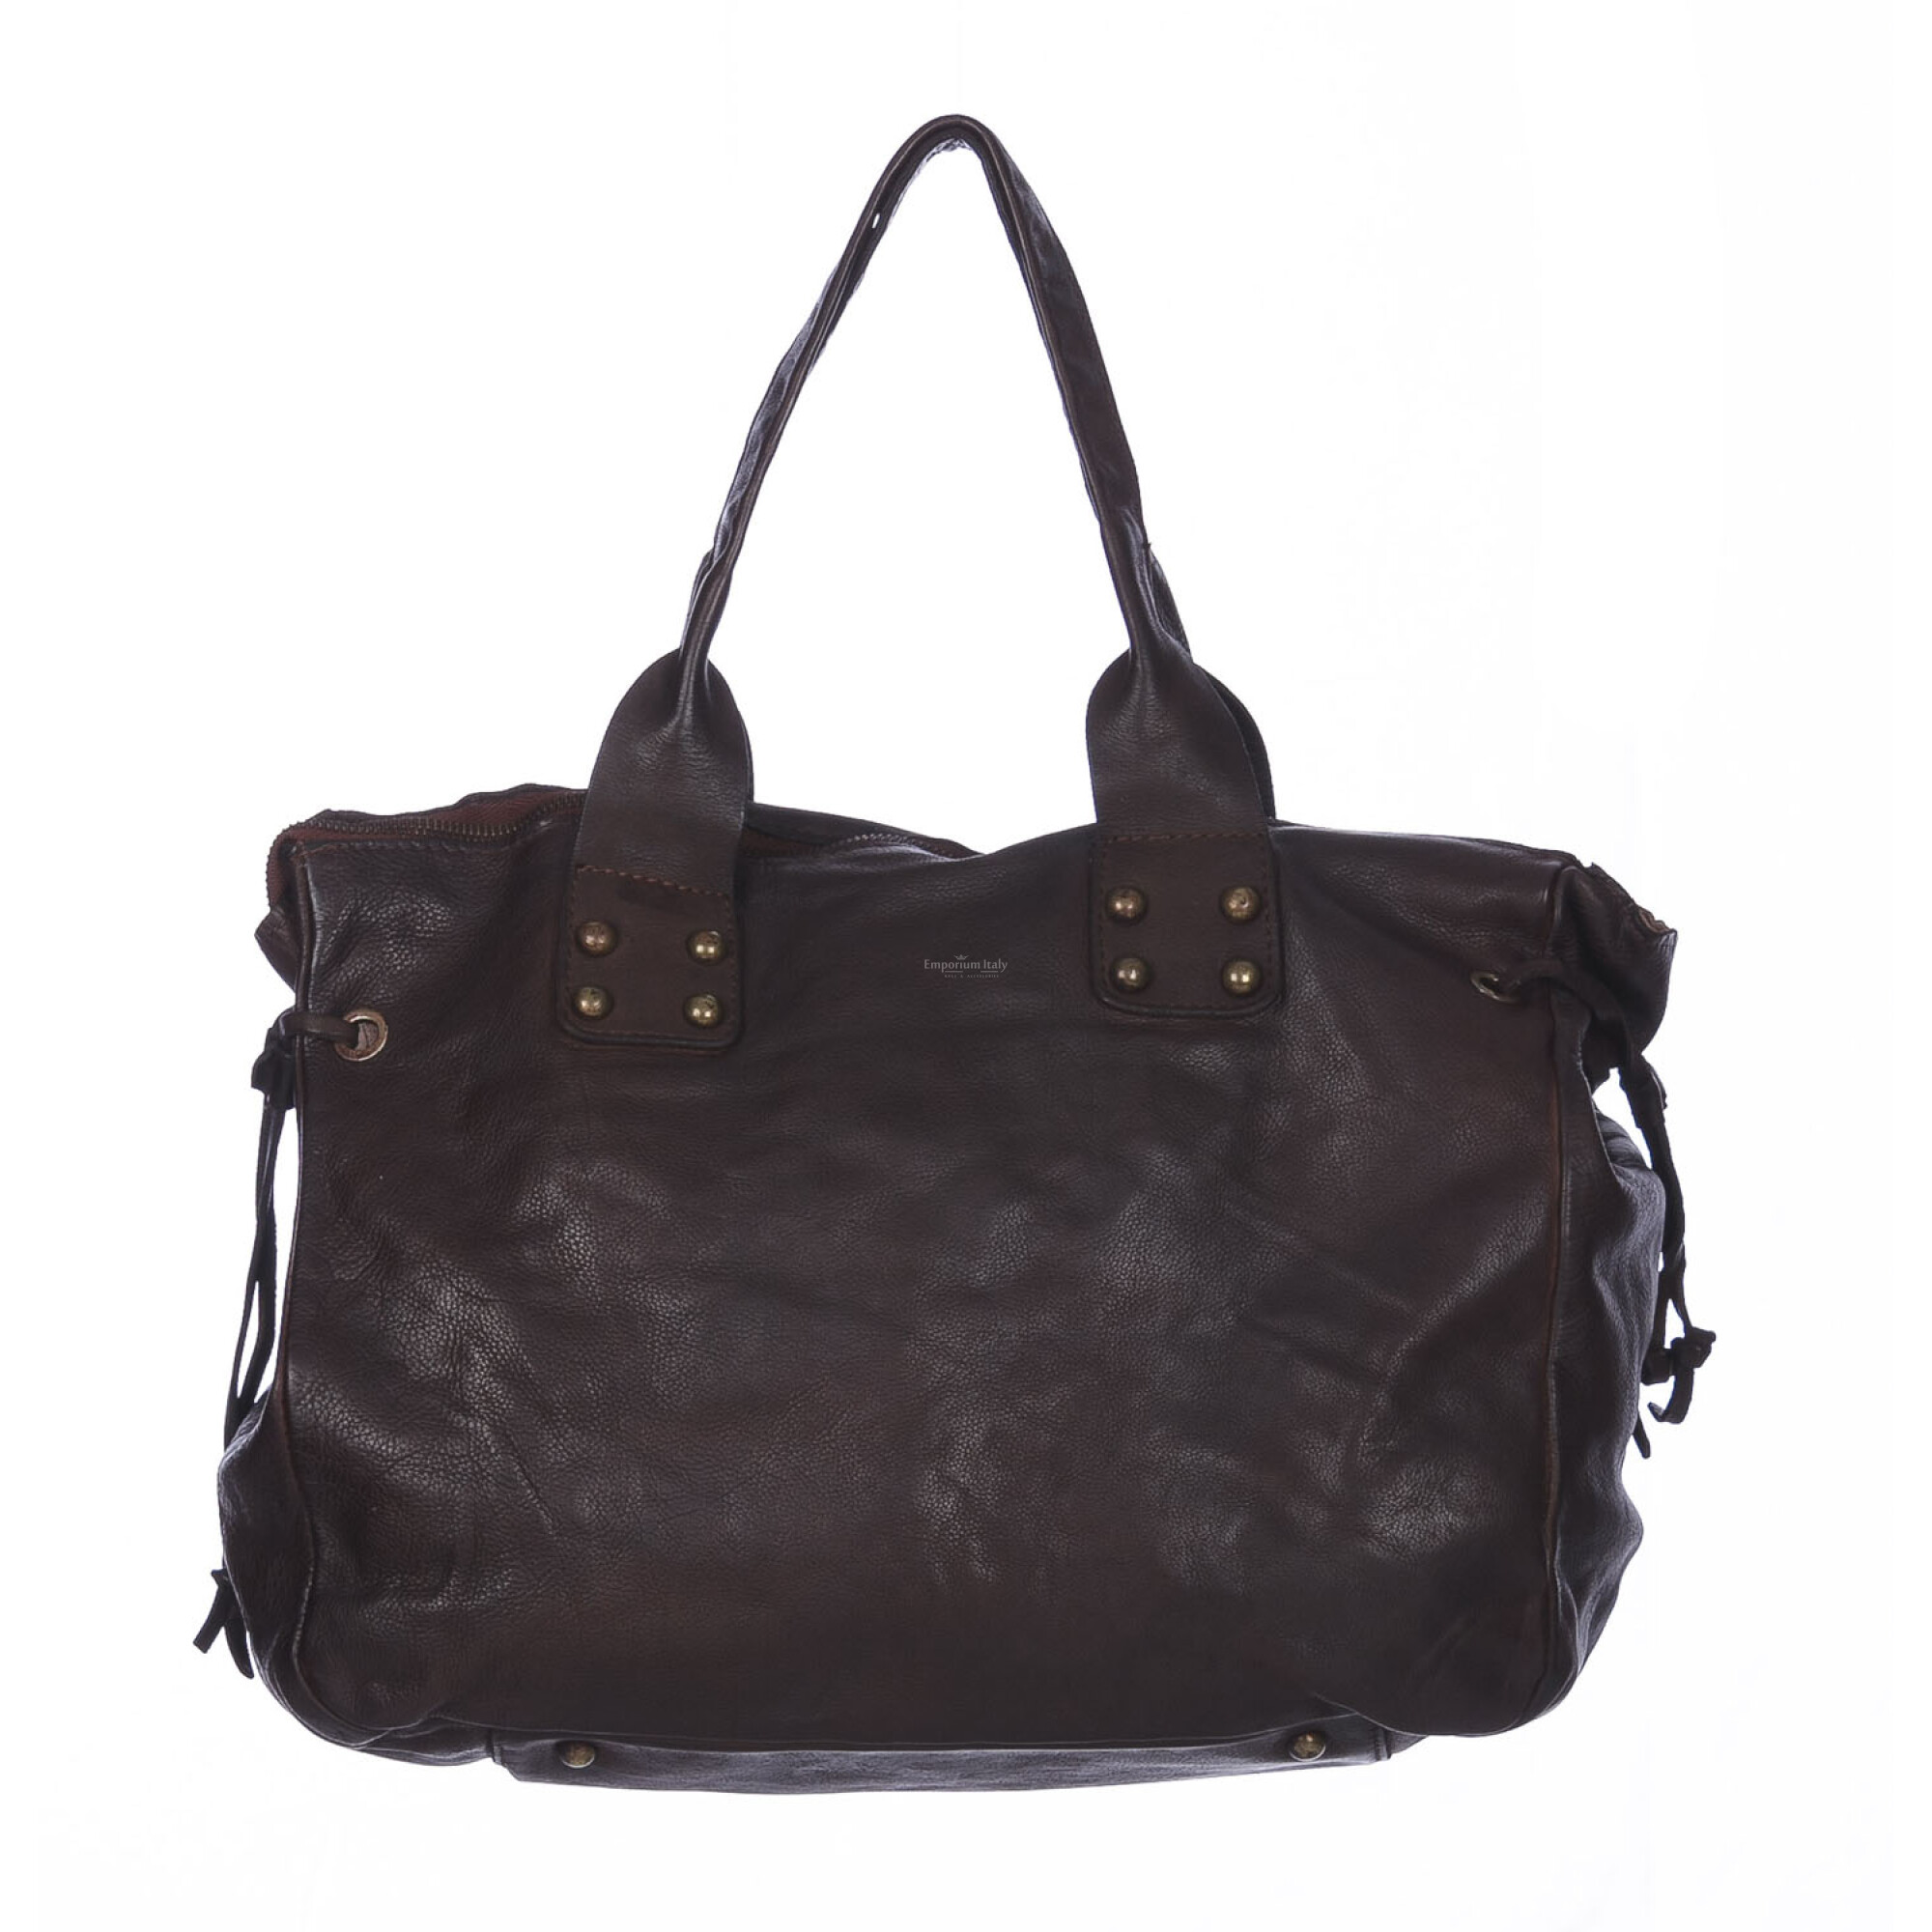 Vintage look shoulderbag in soft leather / 15322 - Black (Nero